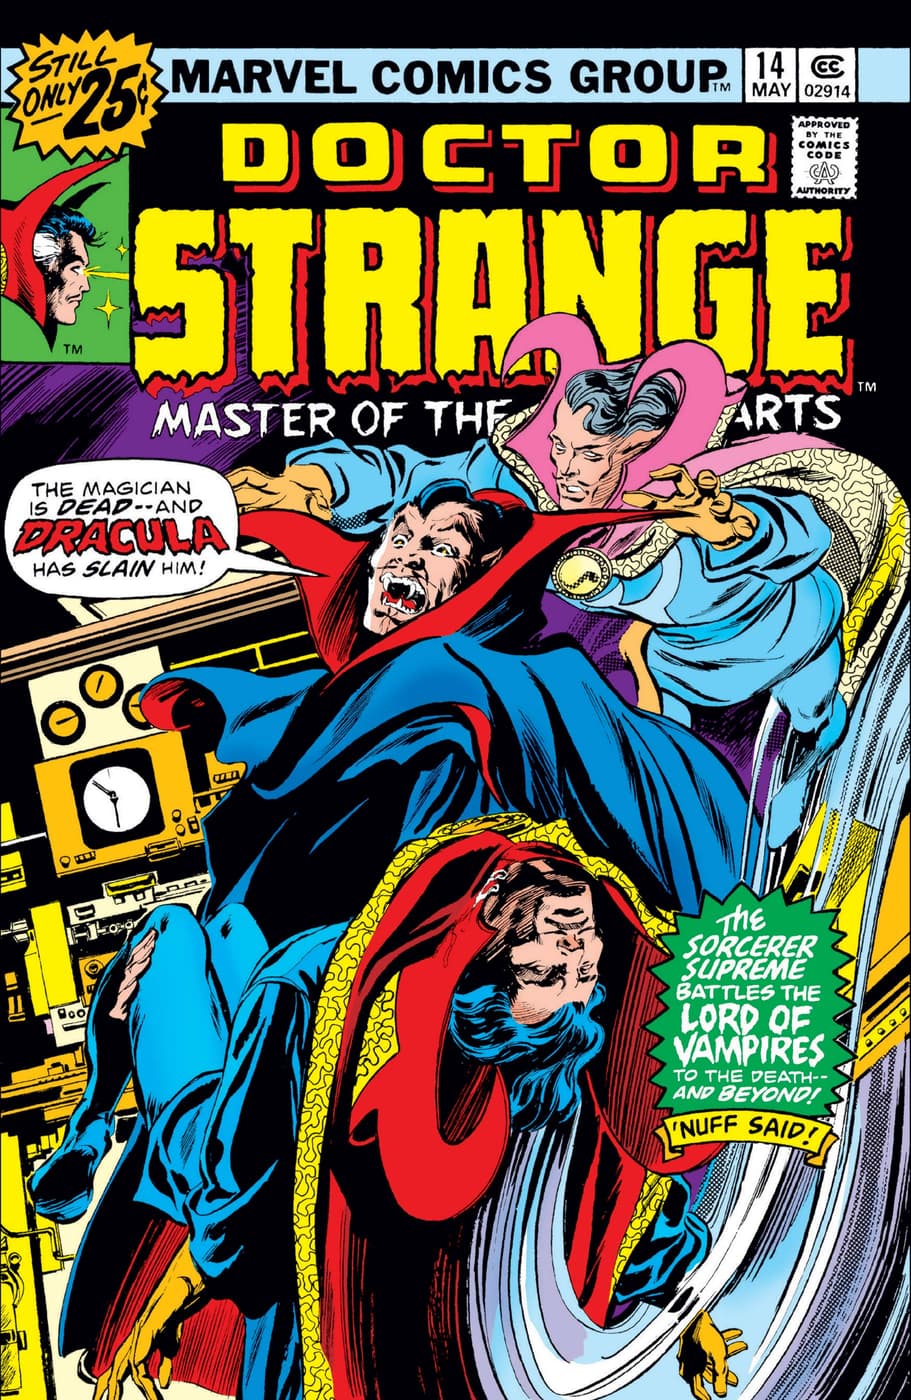 DOCTOR STRANGE (1974) #14 cover by Gene Colan